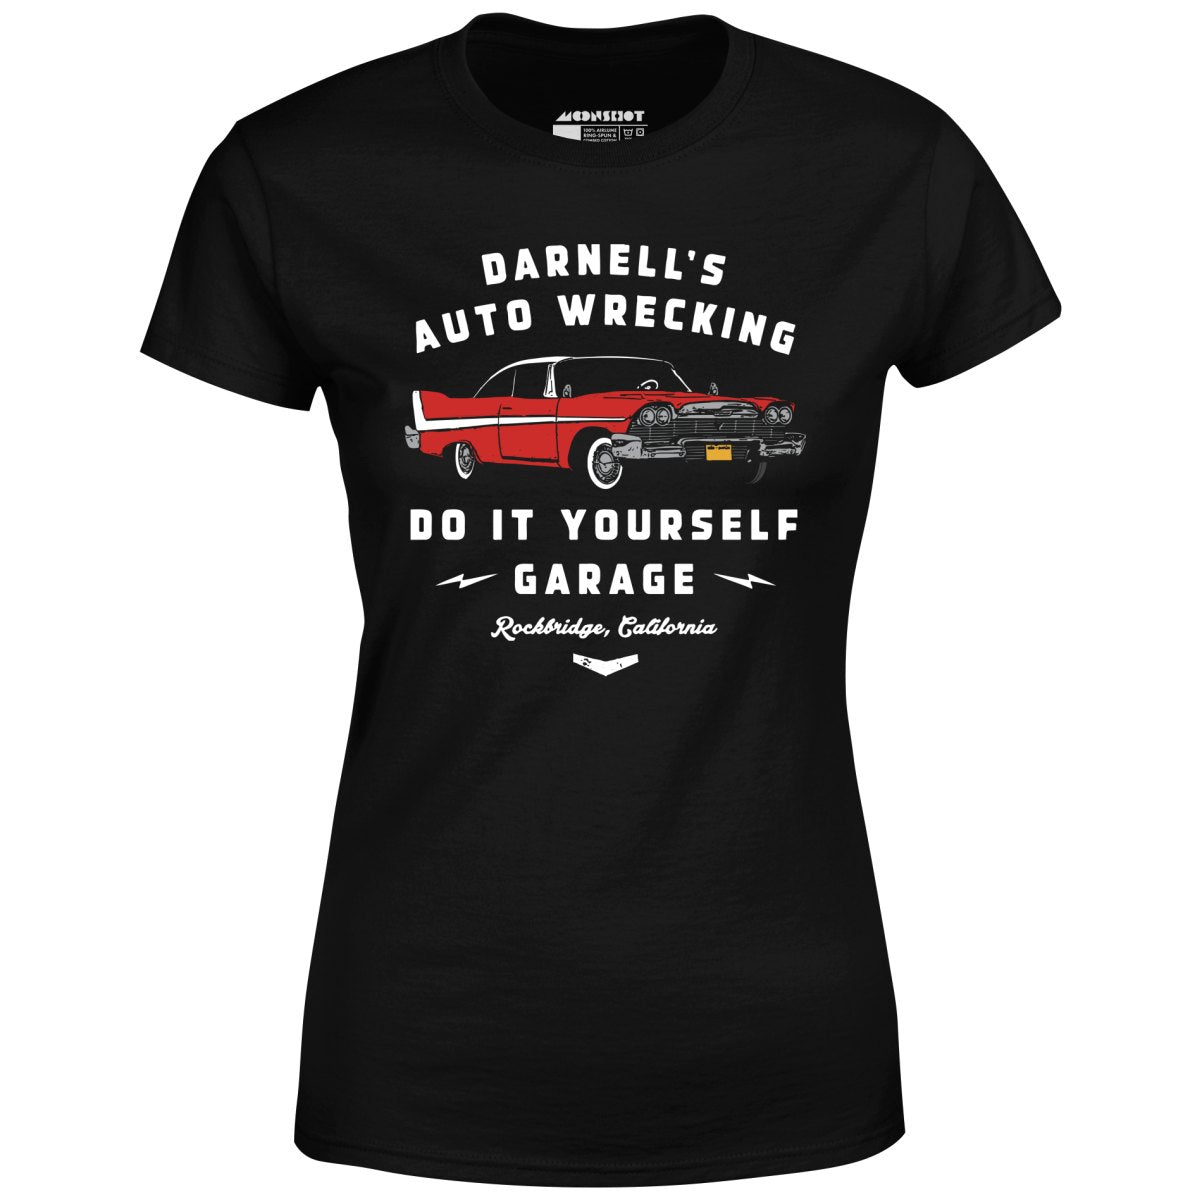 Darnell's Auto Wrecking - Do it Yourself Garage - Women's T-Shirt